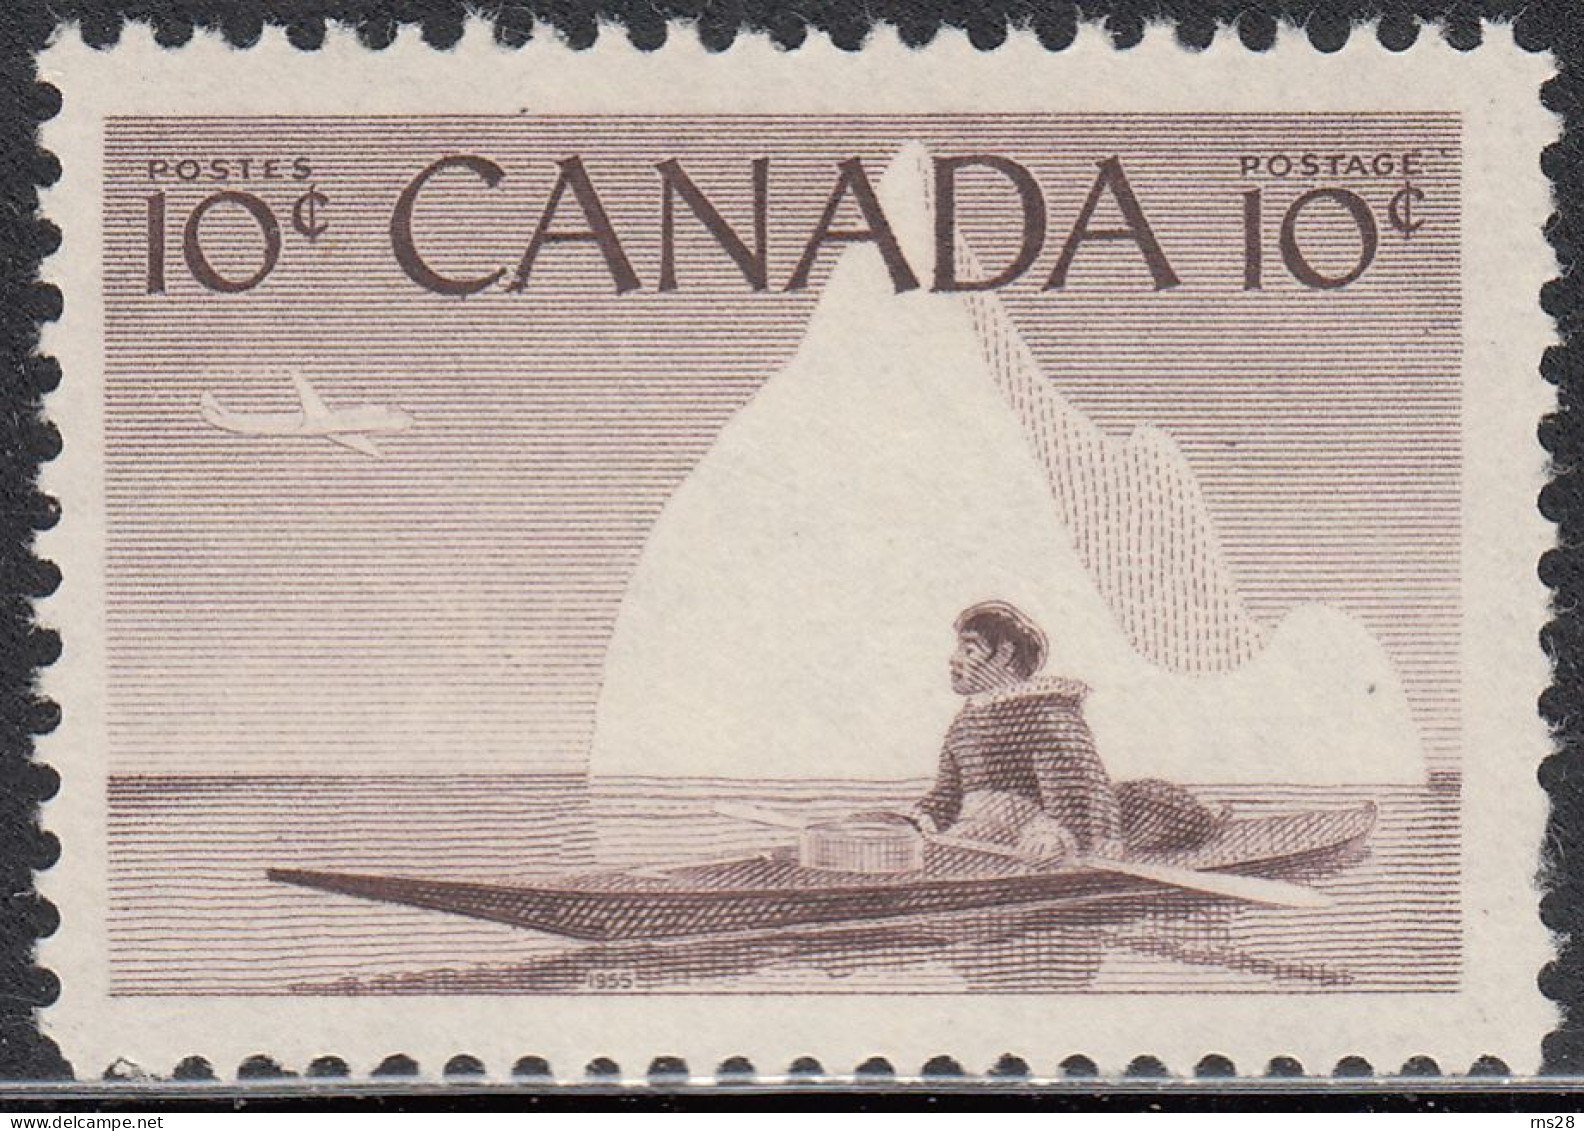 Canada Scott # 351 MNH Inuk & Kayak - Ongebruikt